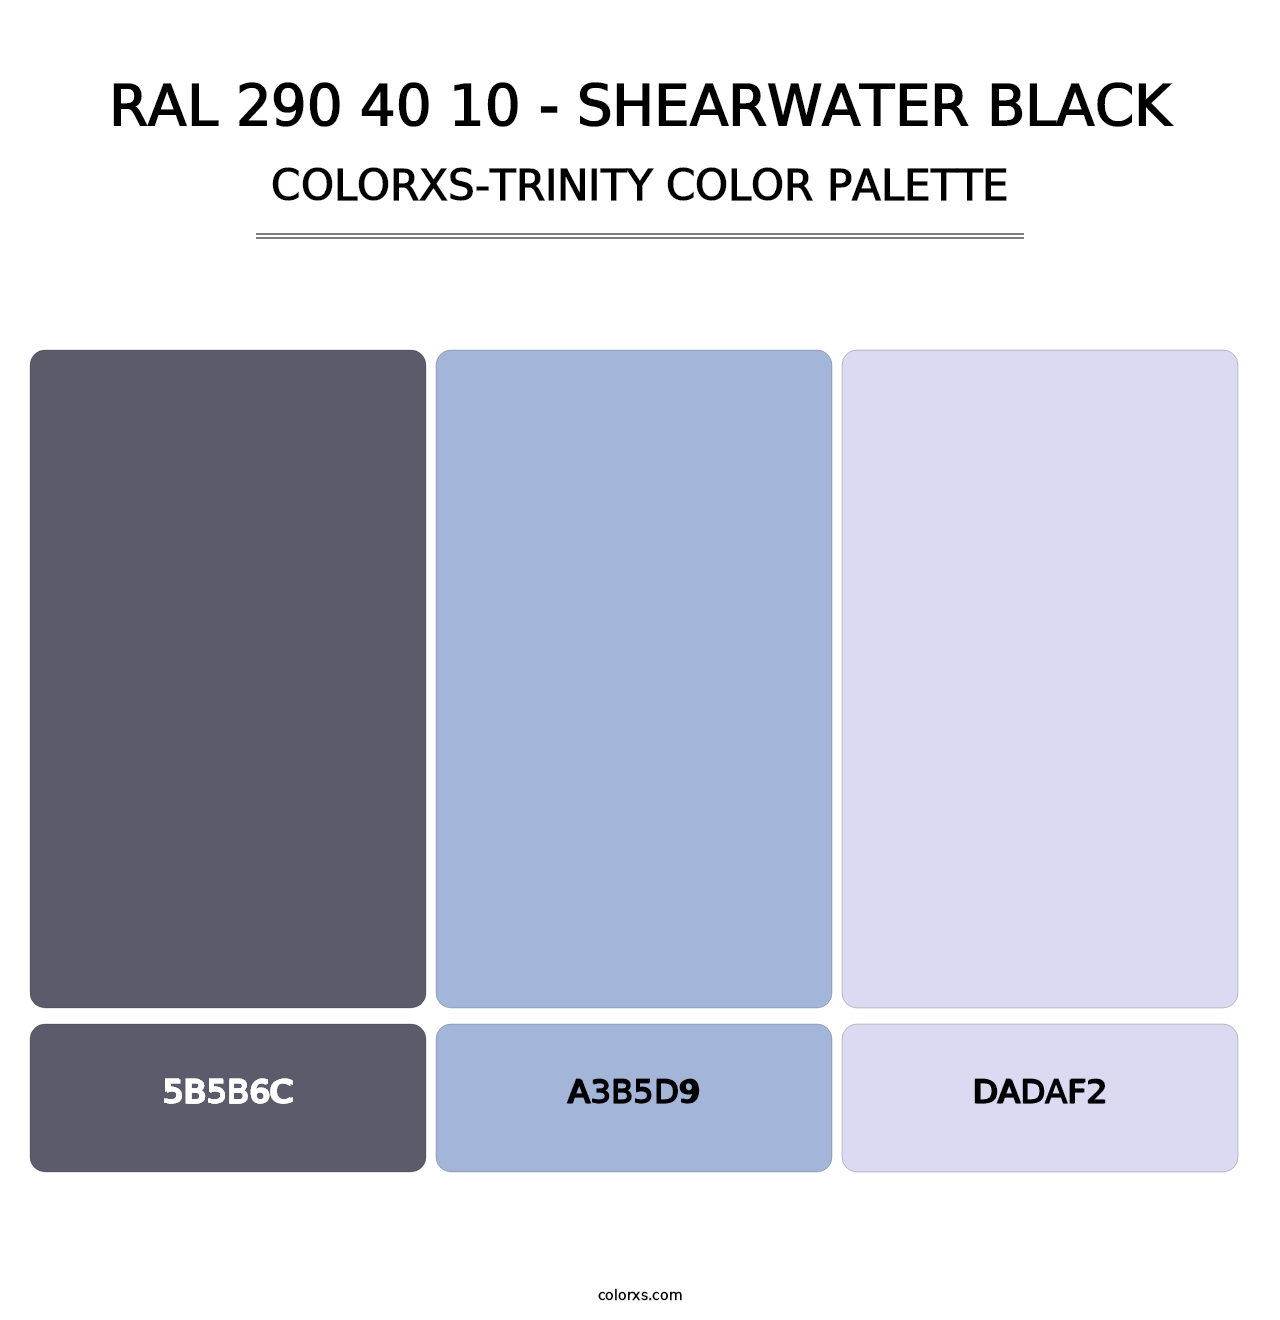 RAL 290 40 10 - Shearwater Black - Colorxs Trinity Palette